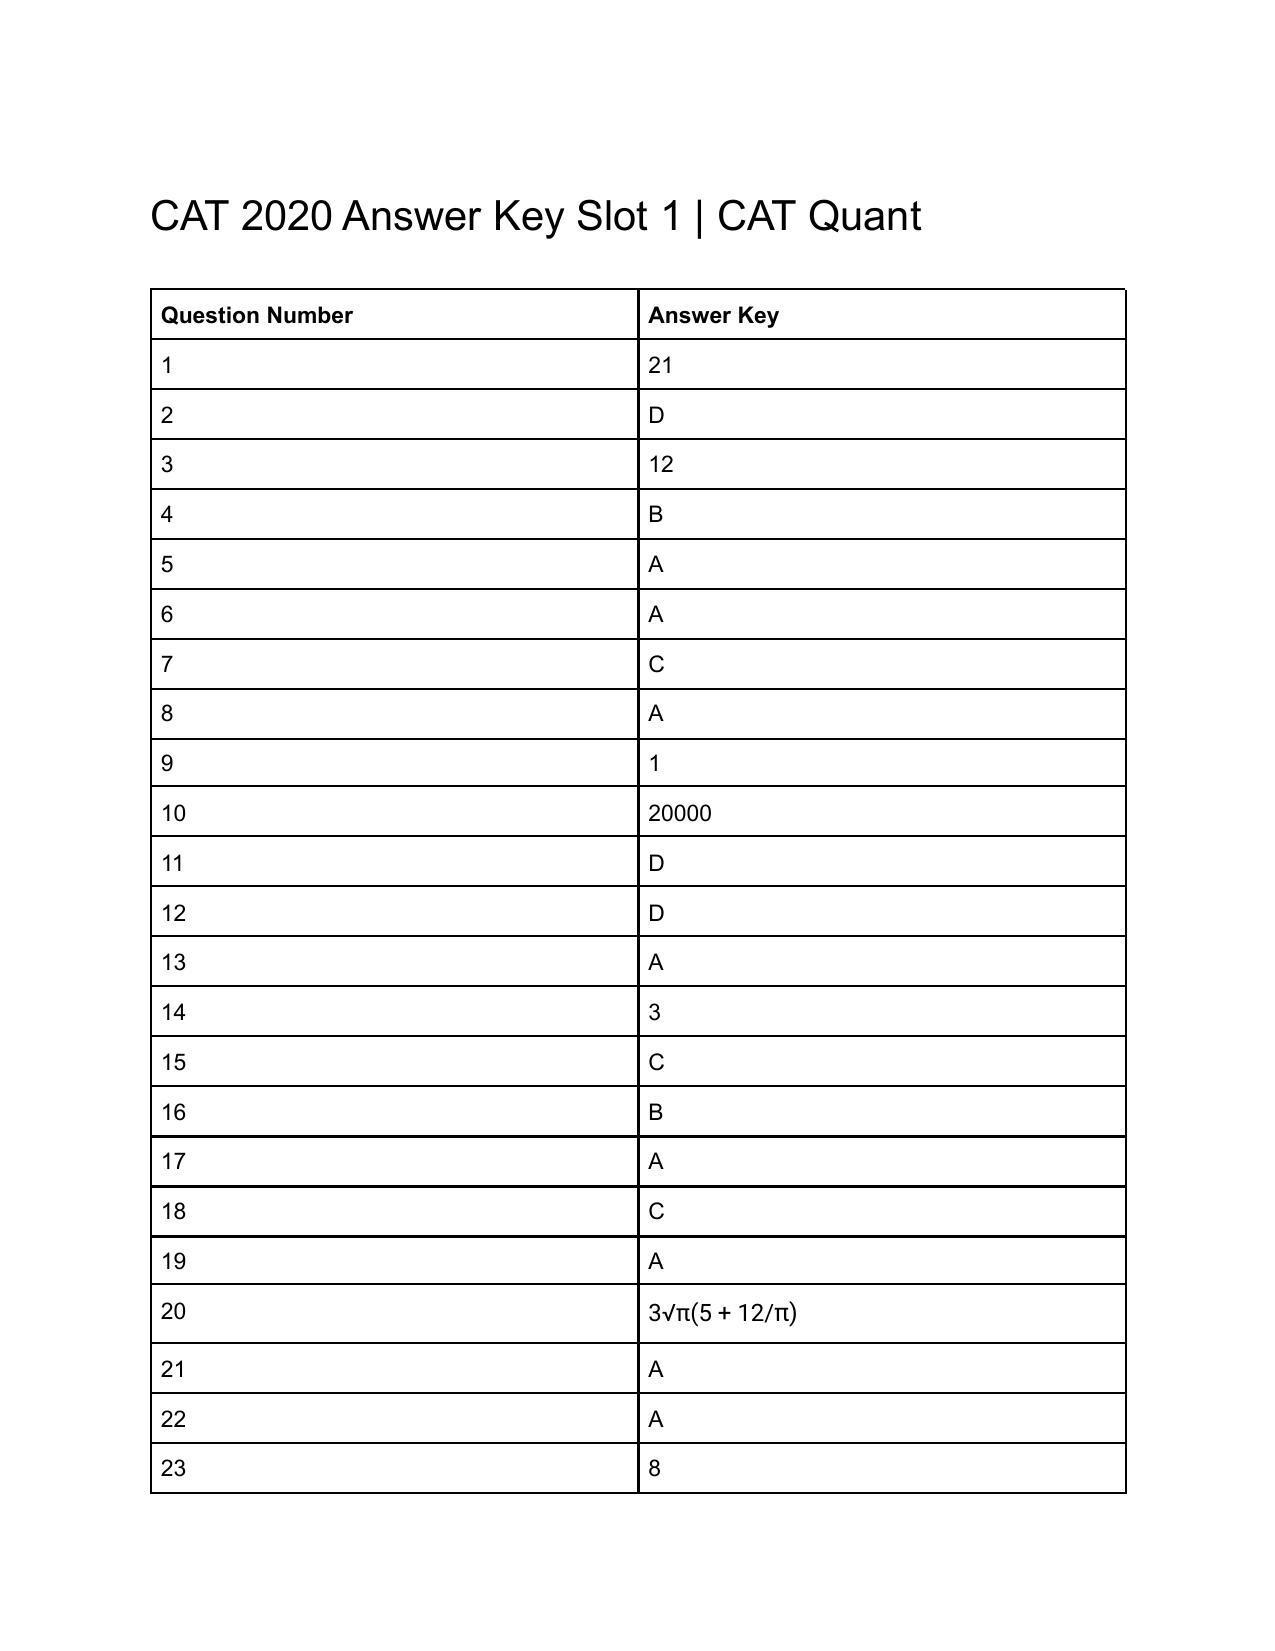 CAT 2020 CAT QA Slot 1 Answer Key - Page 1